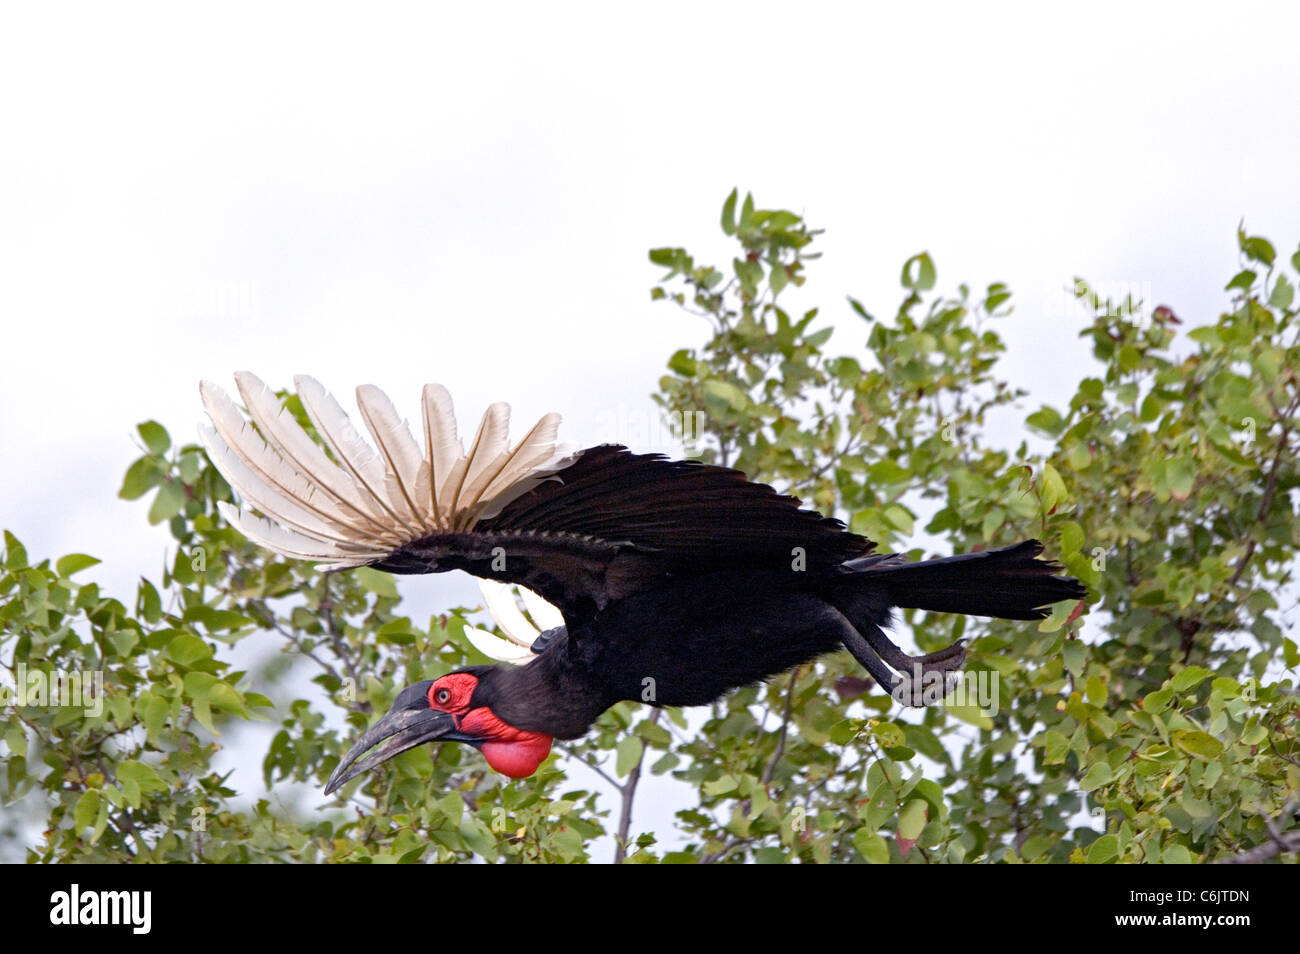 Southern Ground Hornbill in flight. Stock Photo